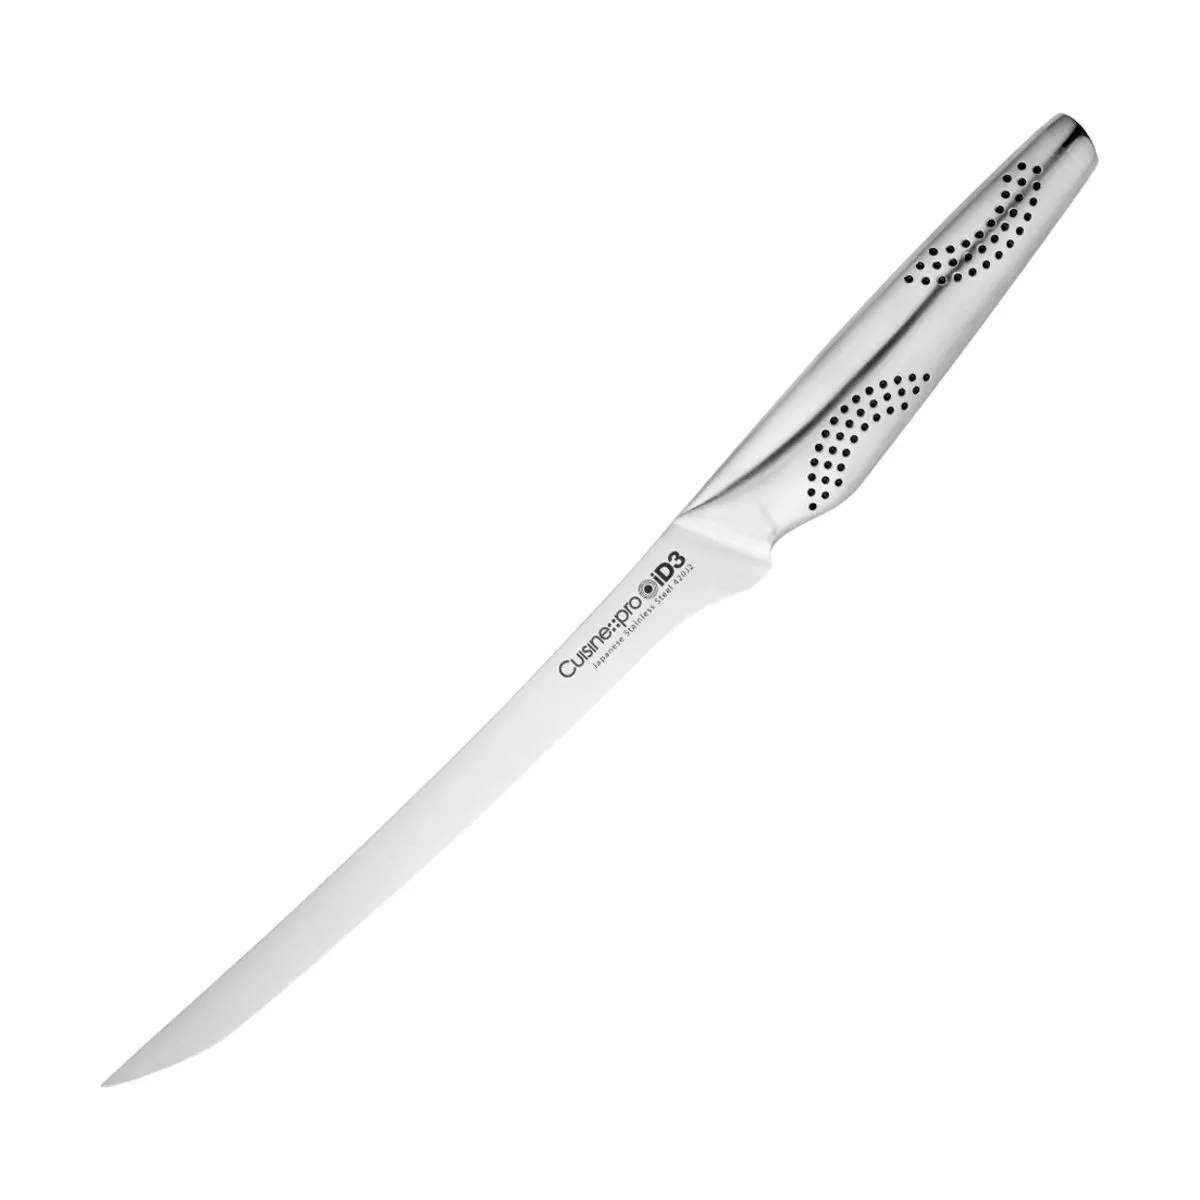 iD3 Fileteringskniv, sølv, large